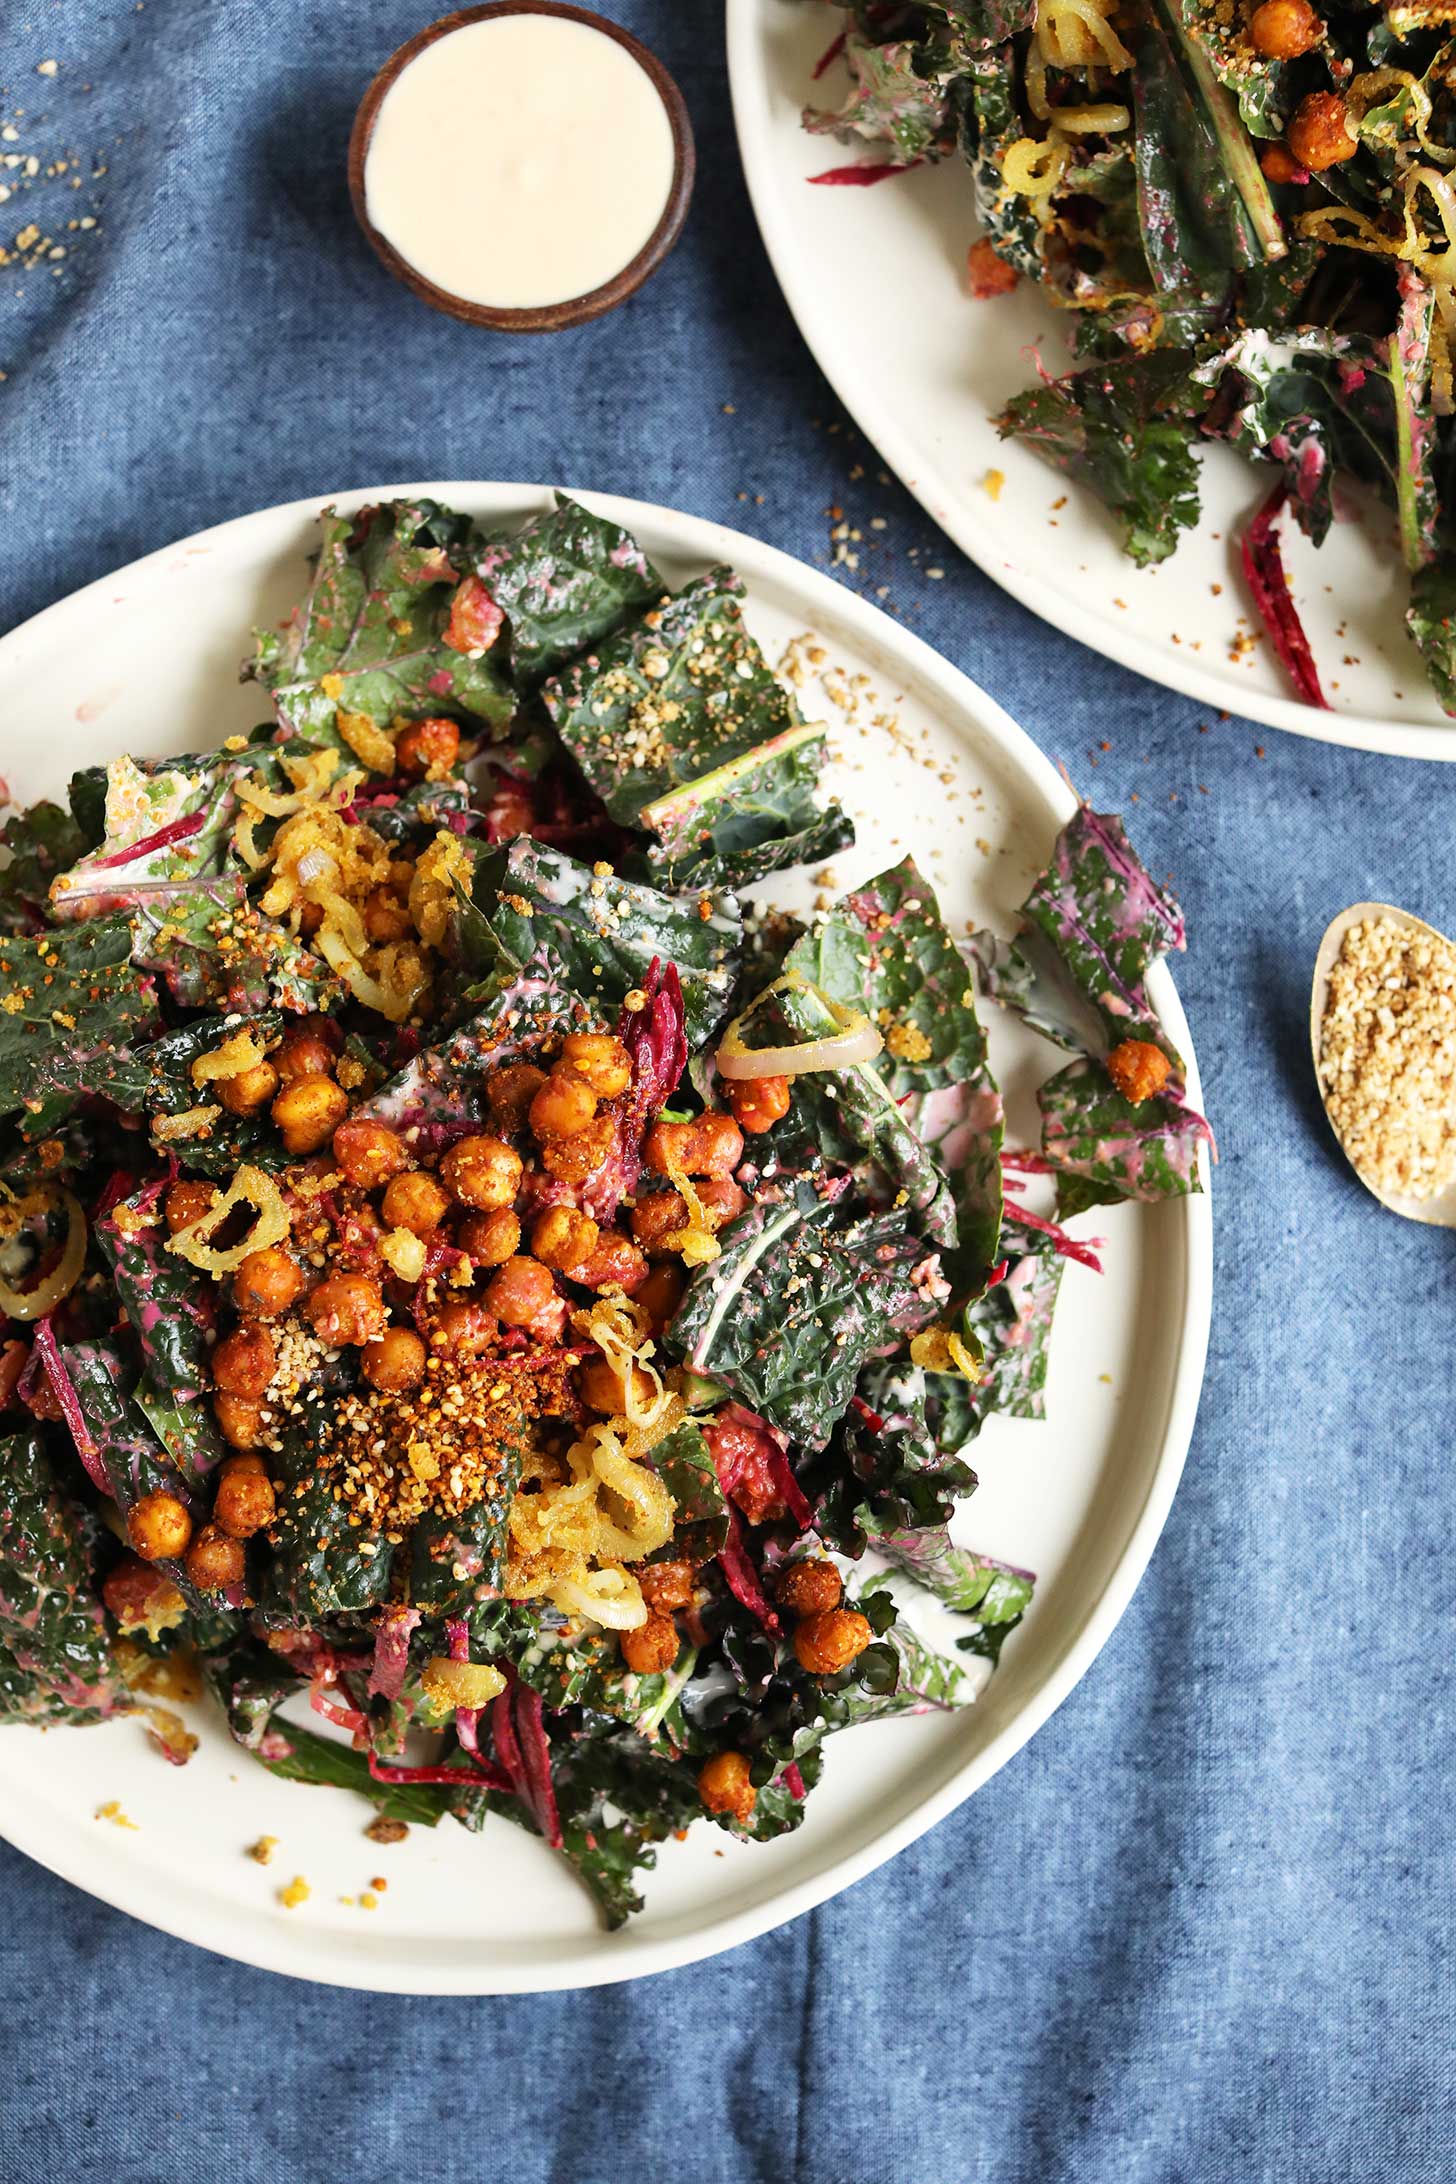 Amazing-30-minute-kale-salad-with-smoky-chickpeas-beets-dukkah-vegan-glutenfree-salad-recipe-healthy